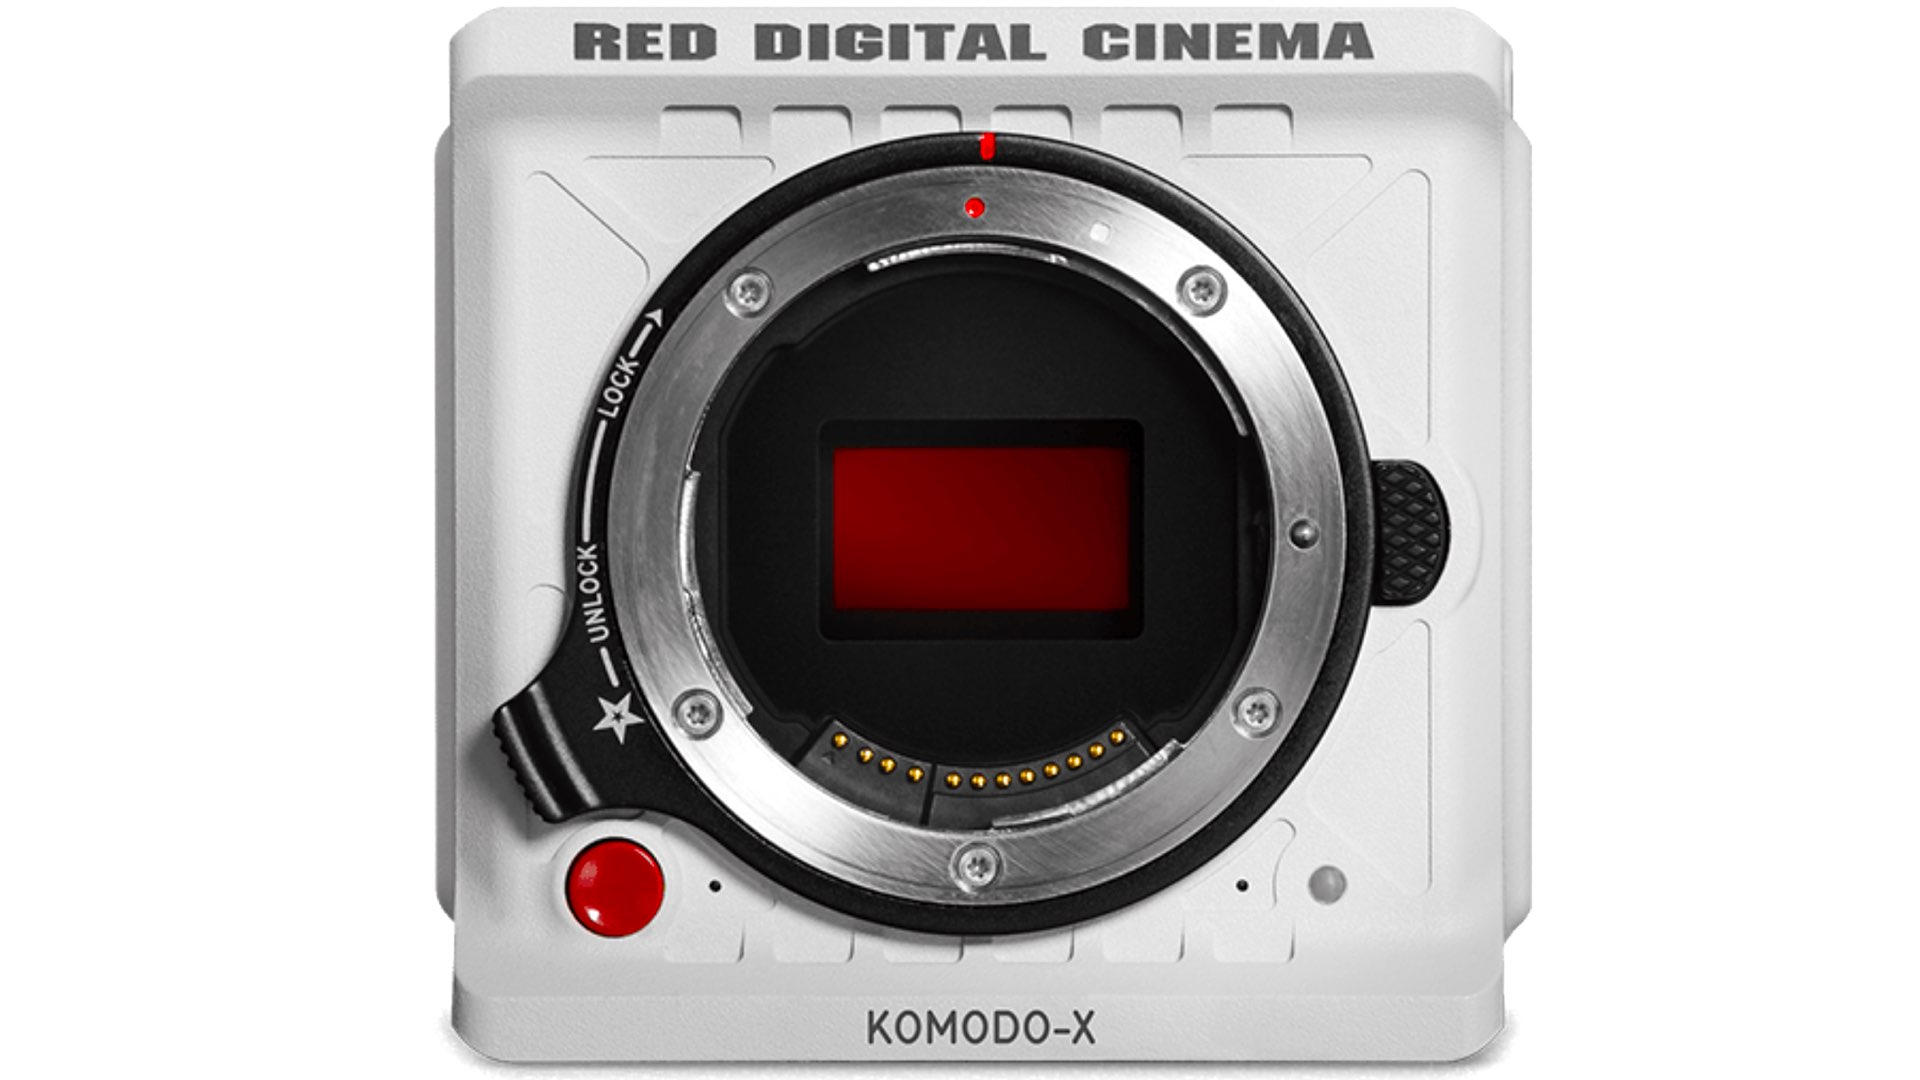 RED Digital Cinema Komodo-X 발표 – YMCinema